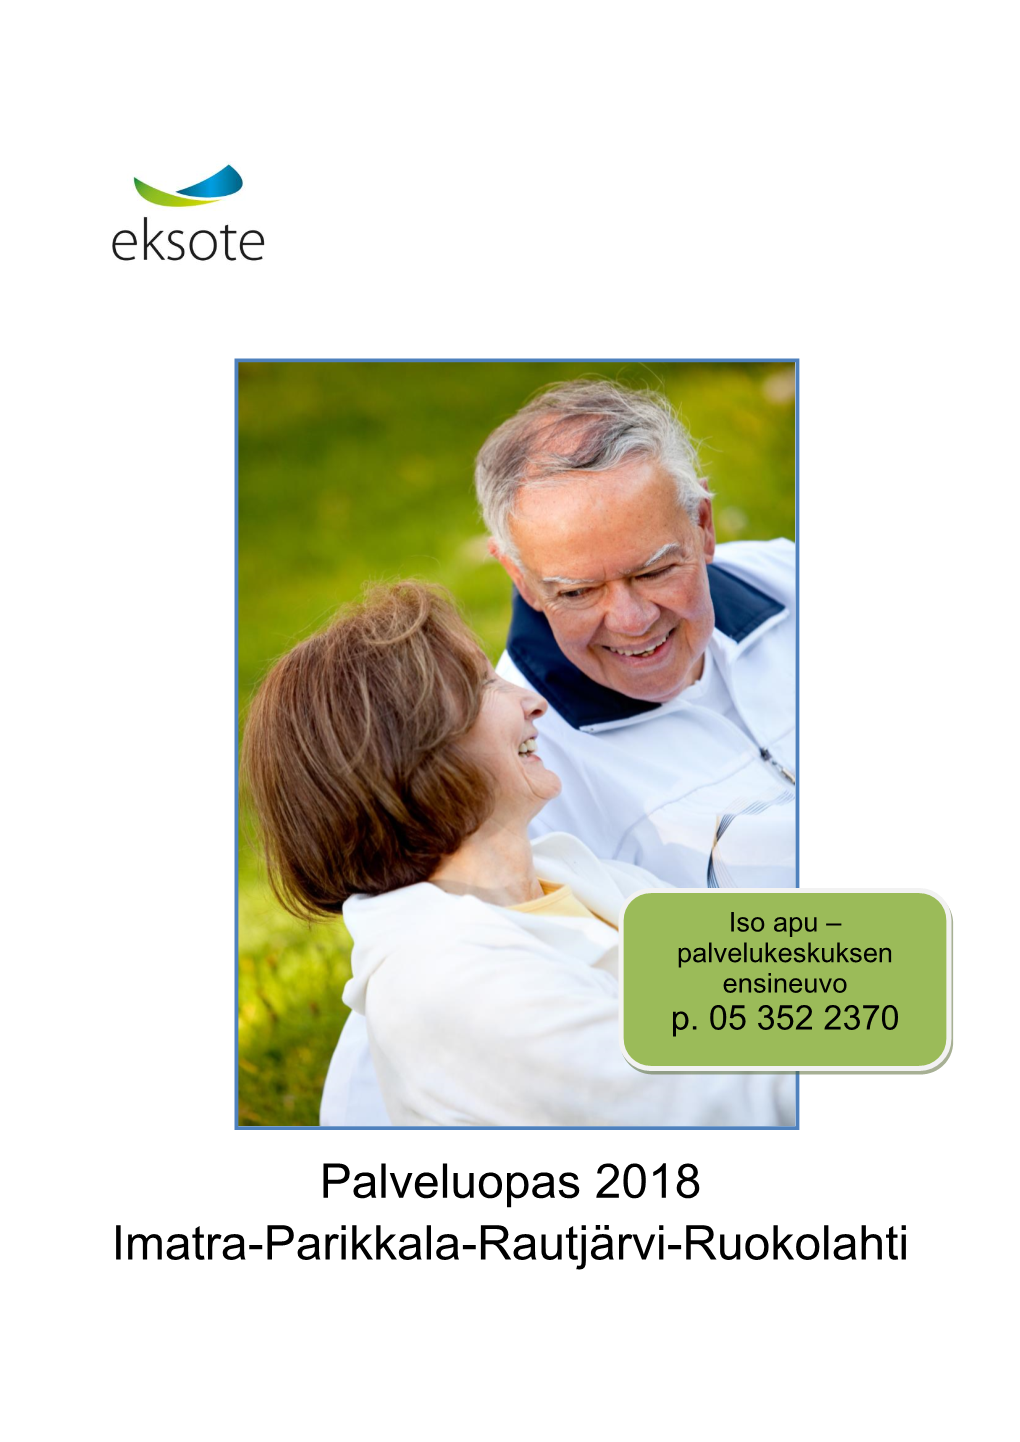 Palveluopas 2018 Imatra-Parikkala-Rautjärvi-Ruokolahti